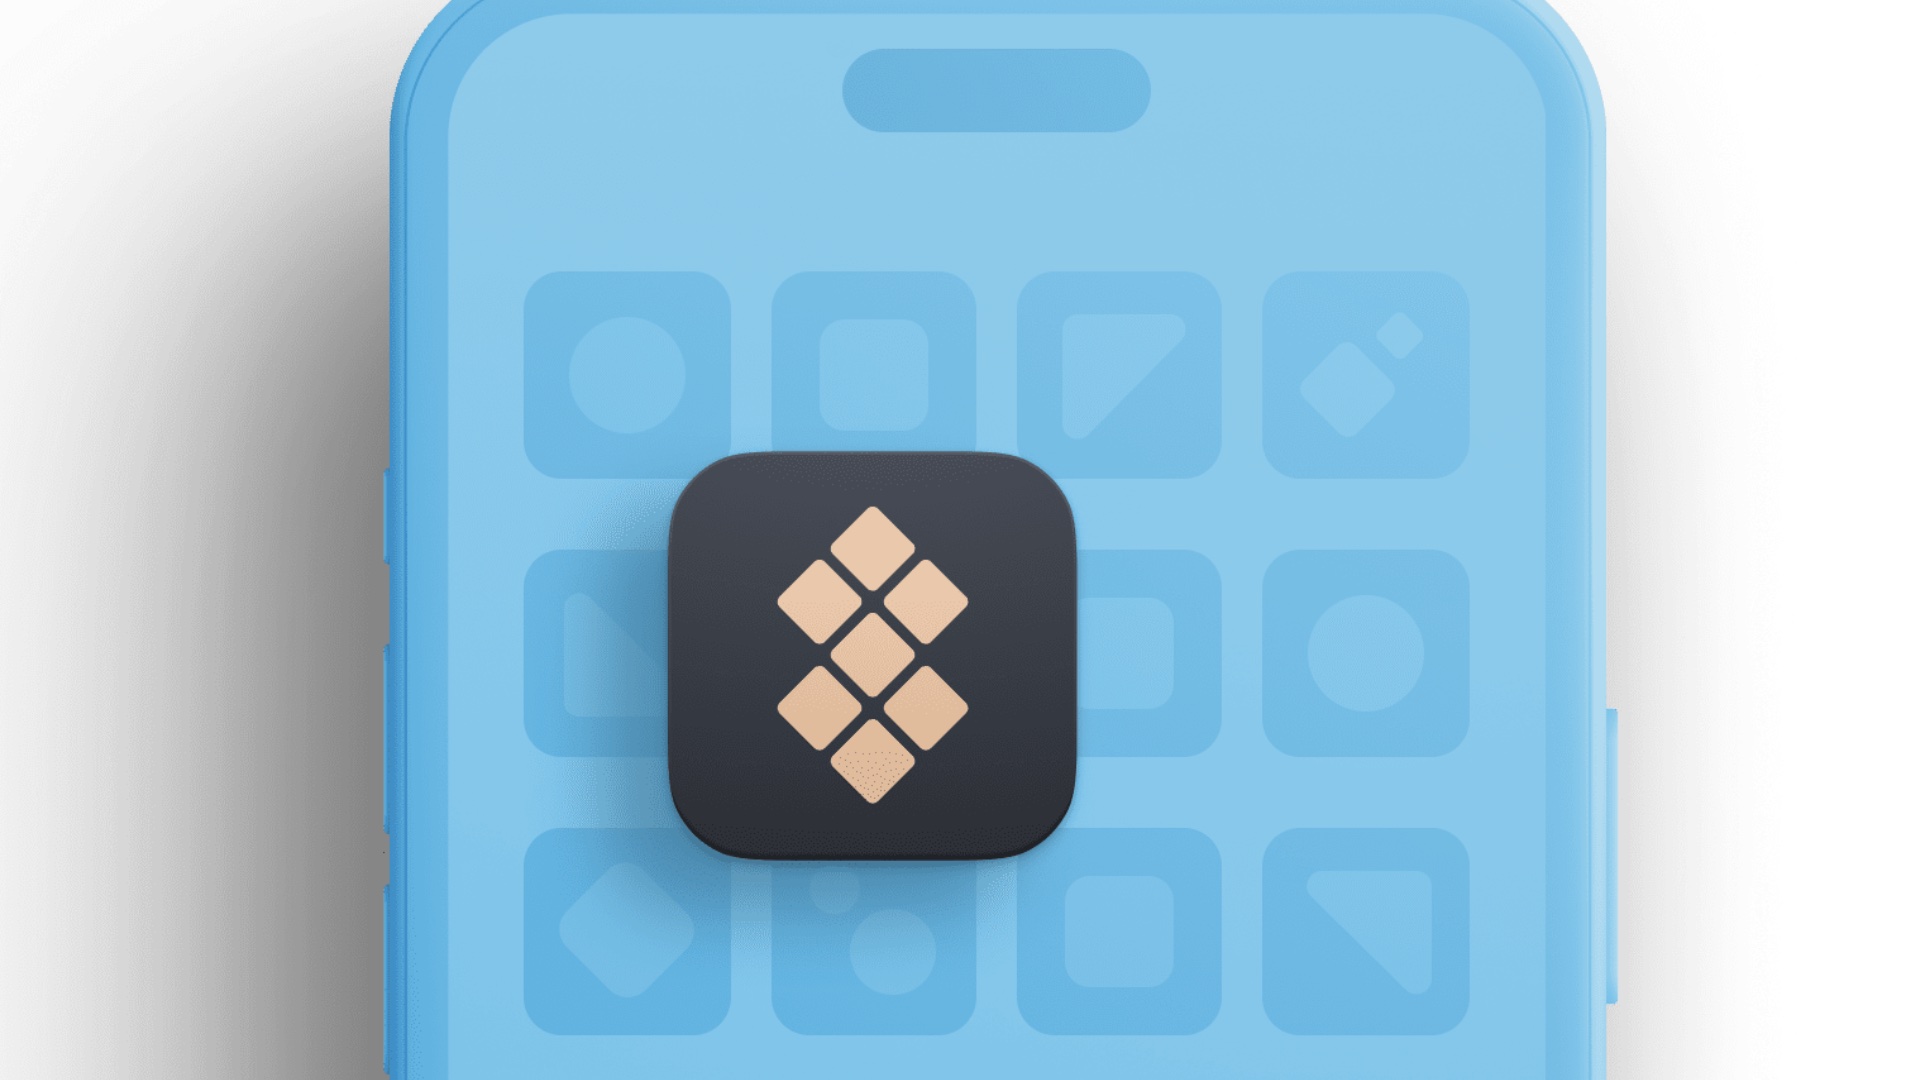 Setapp icon on an iPhone